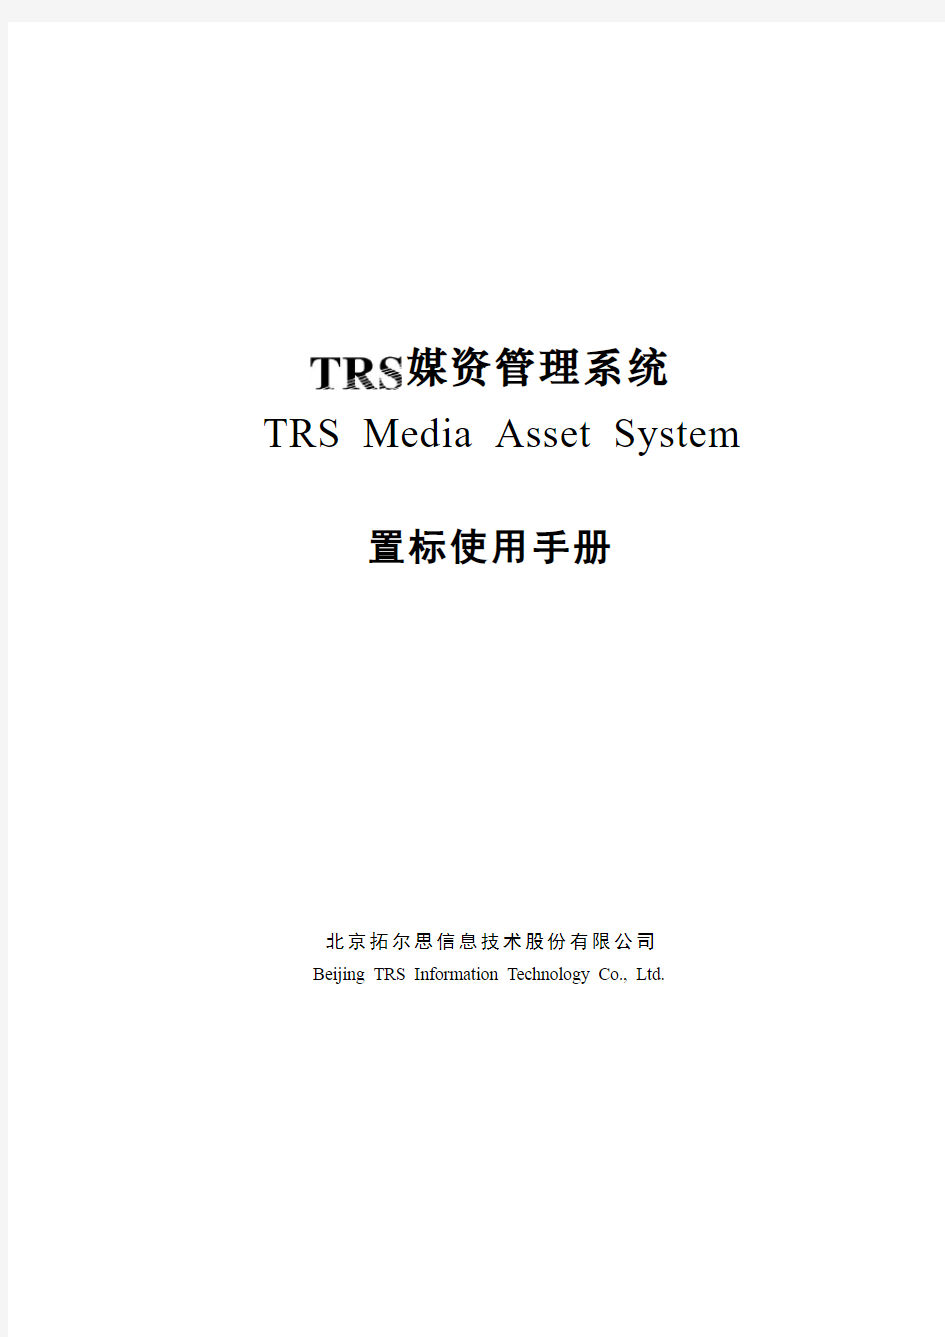 TRSMASv5.0置标使用手册